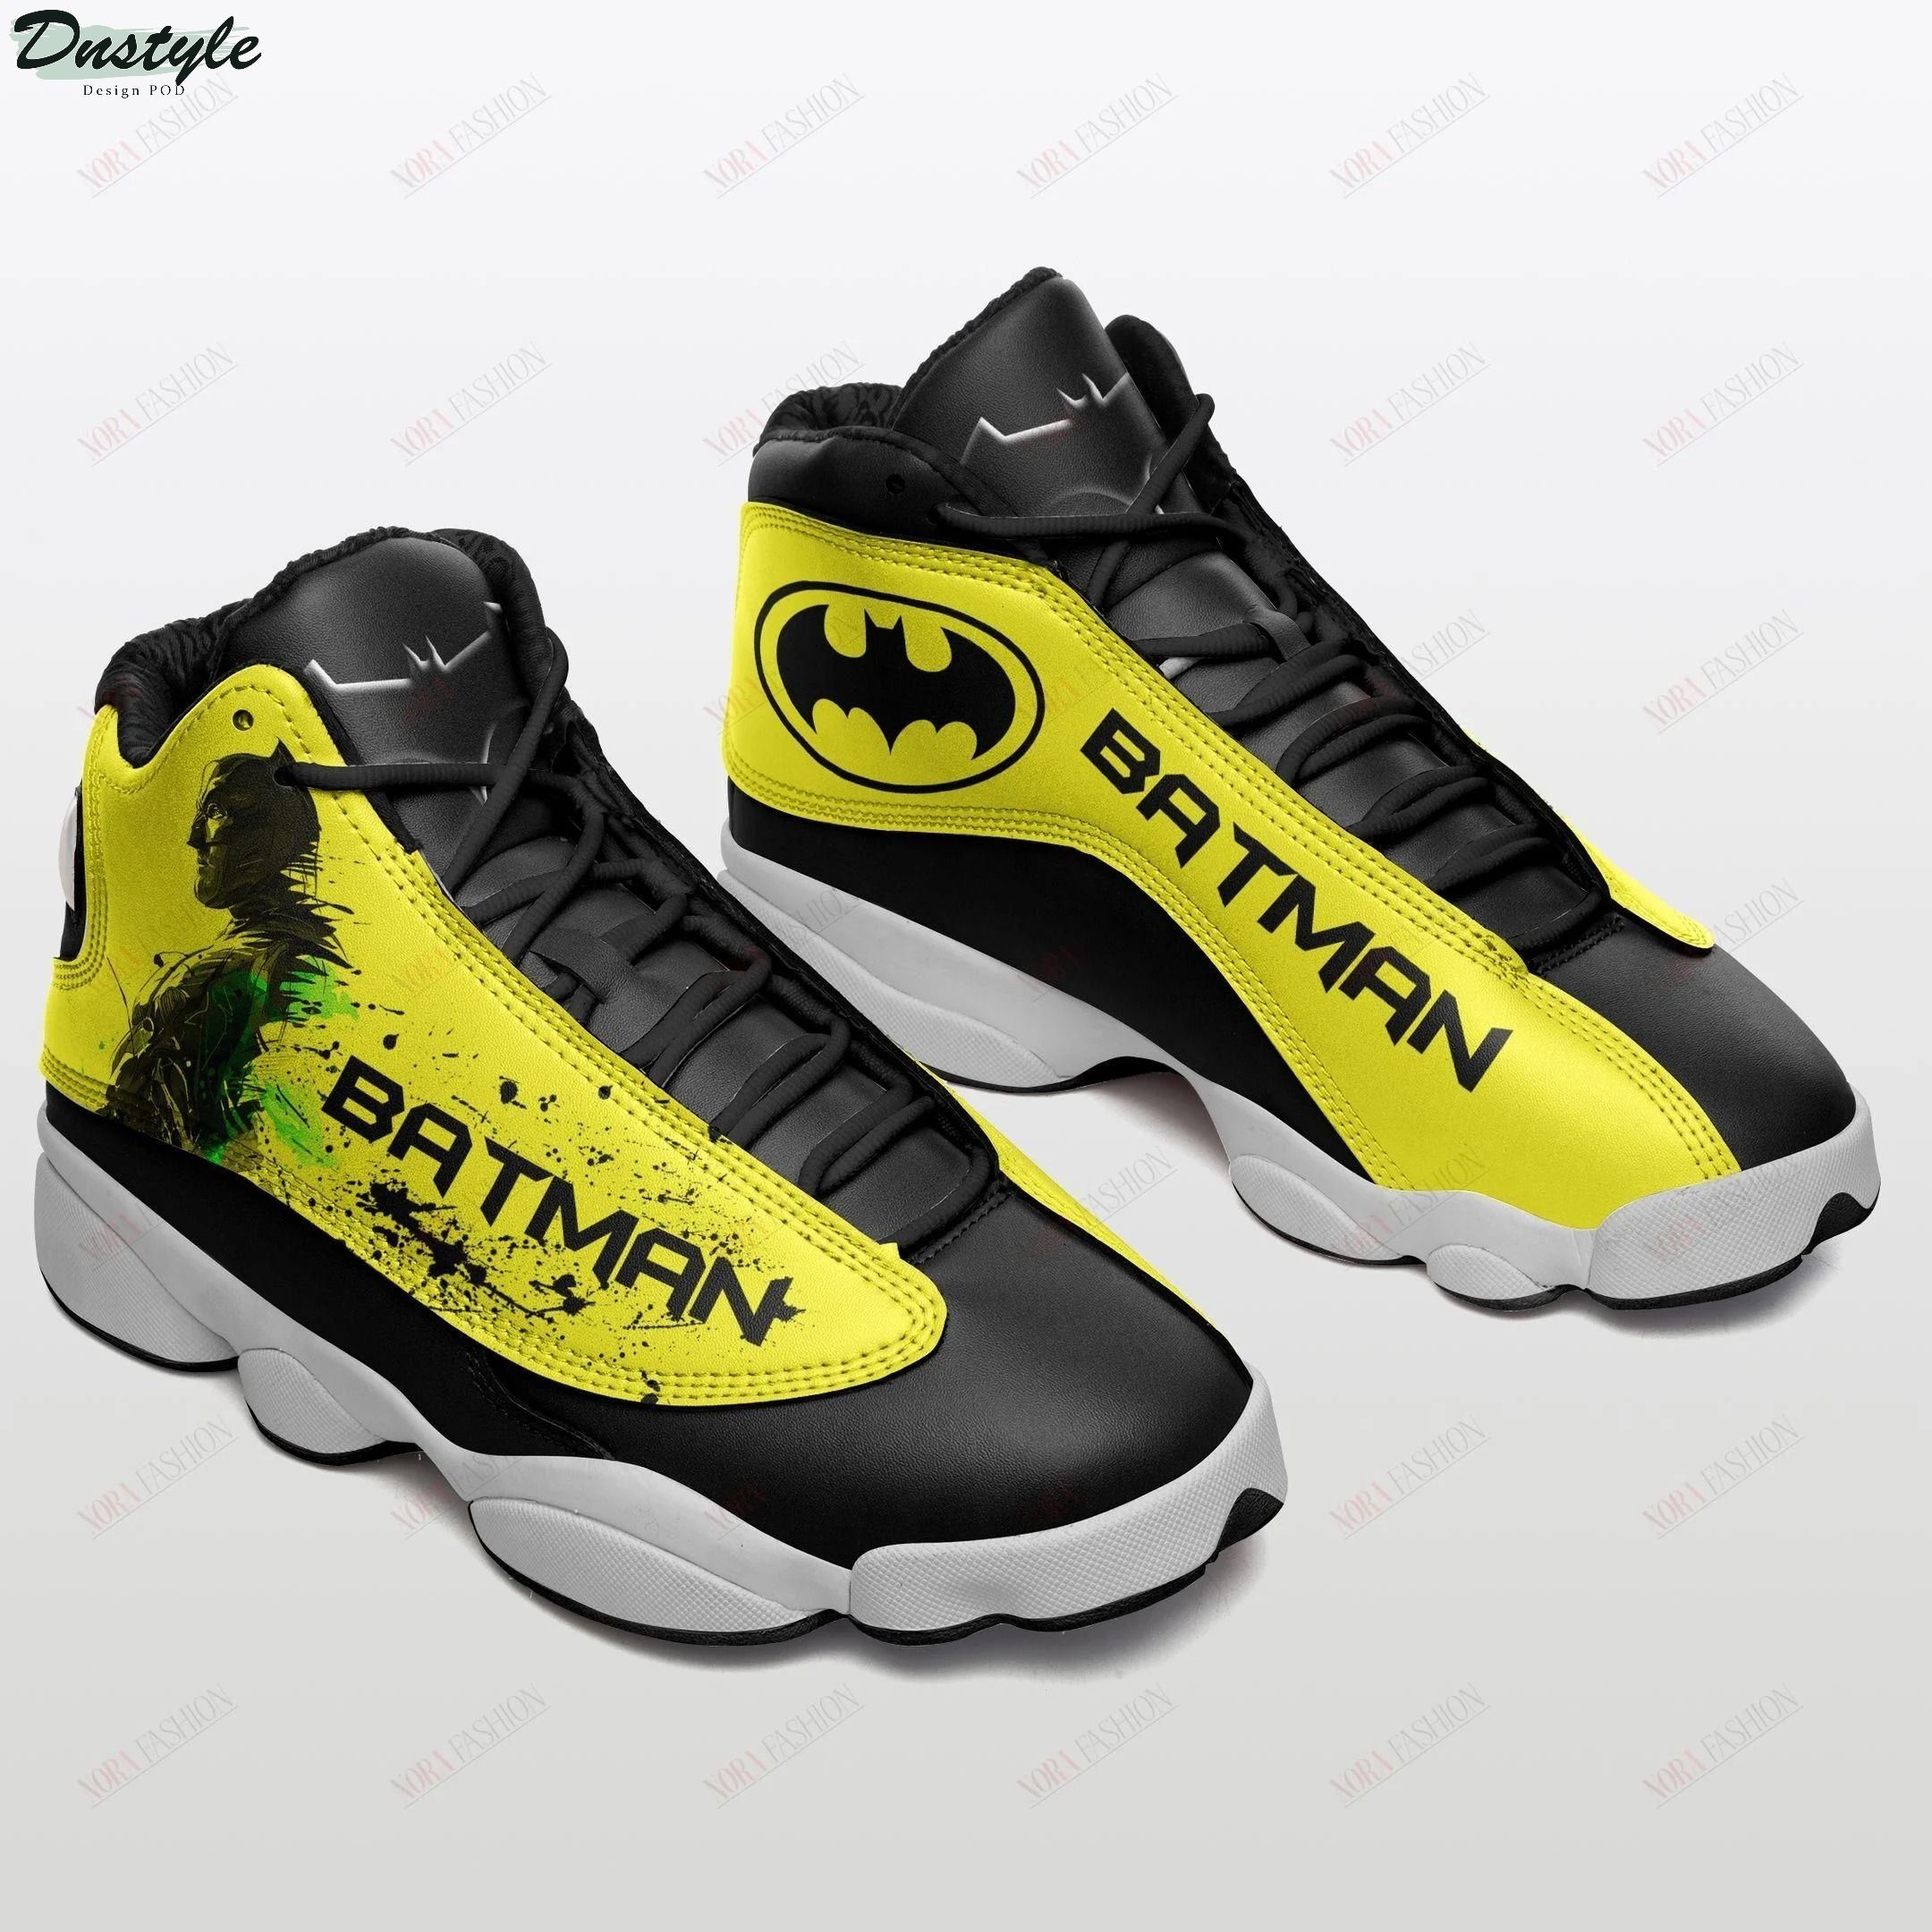 Batman Air Jordan 13 Sneakers Shoes